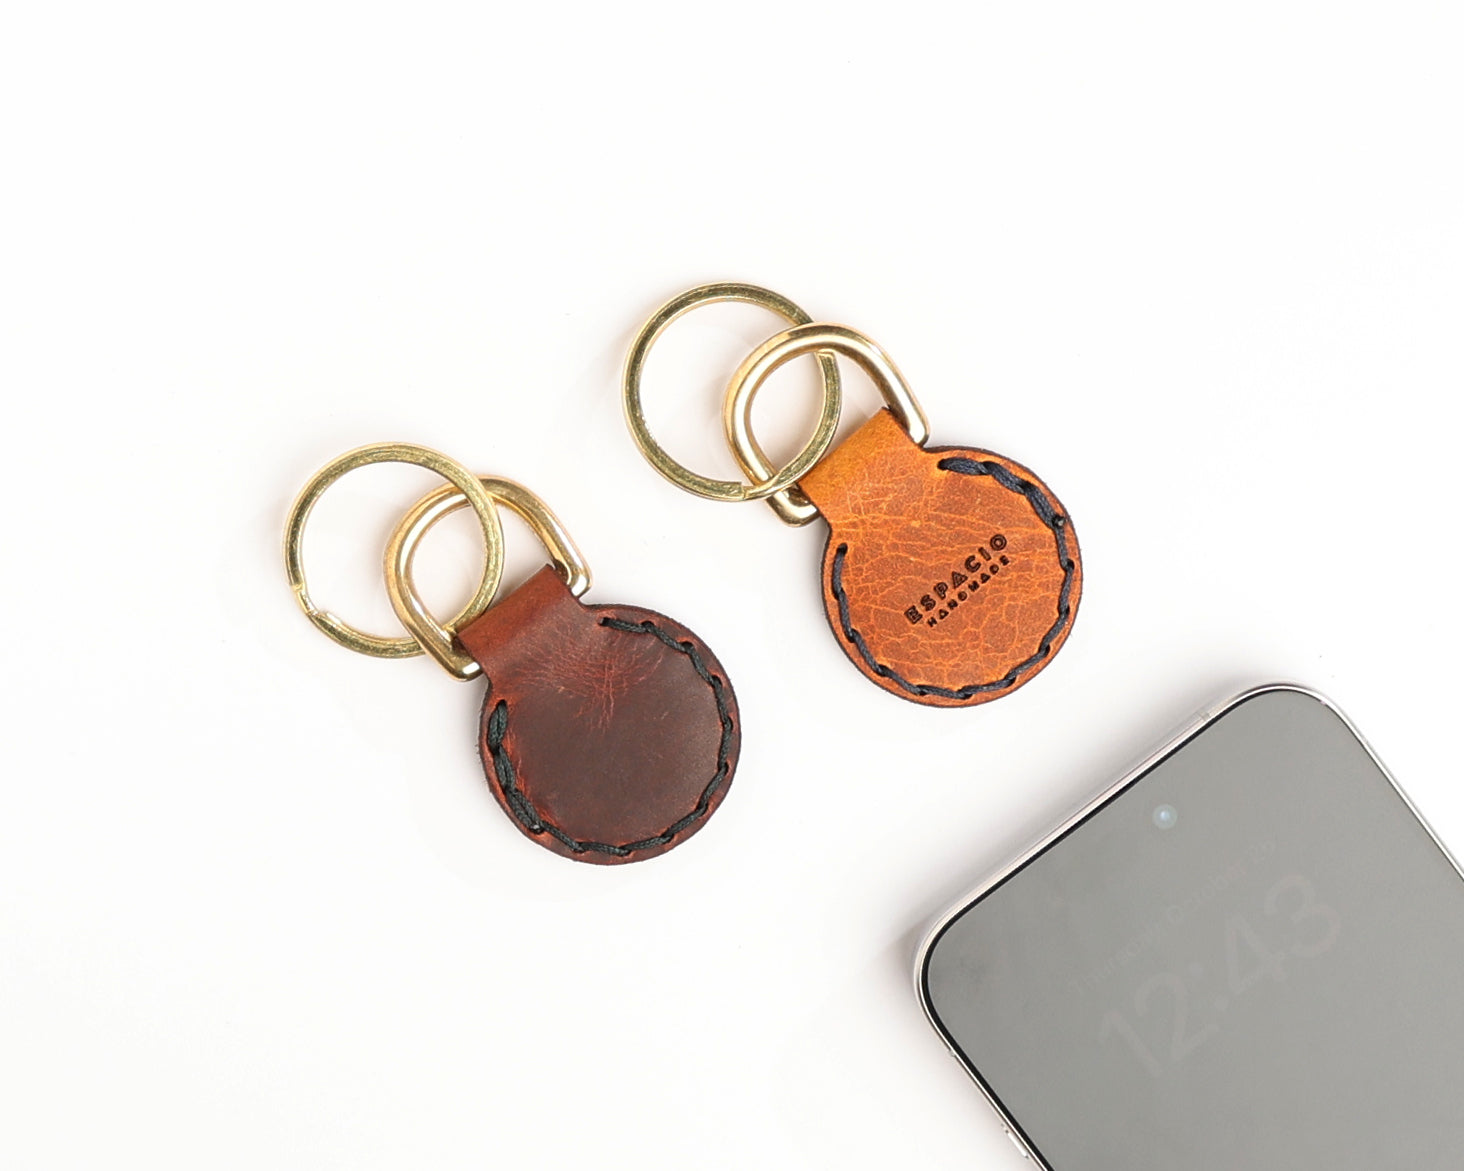 SMART TAP NFC keychain